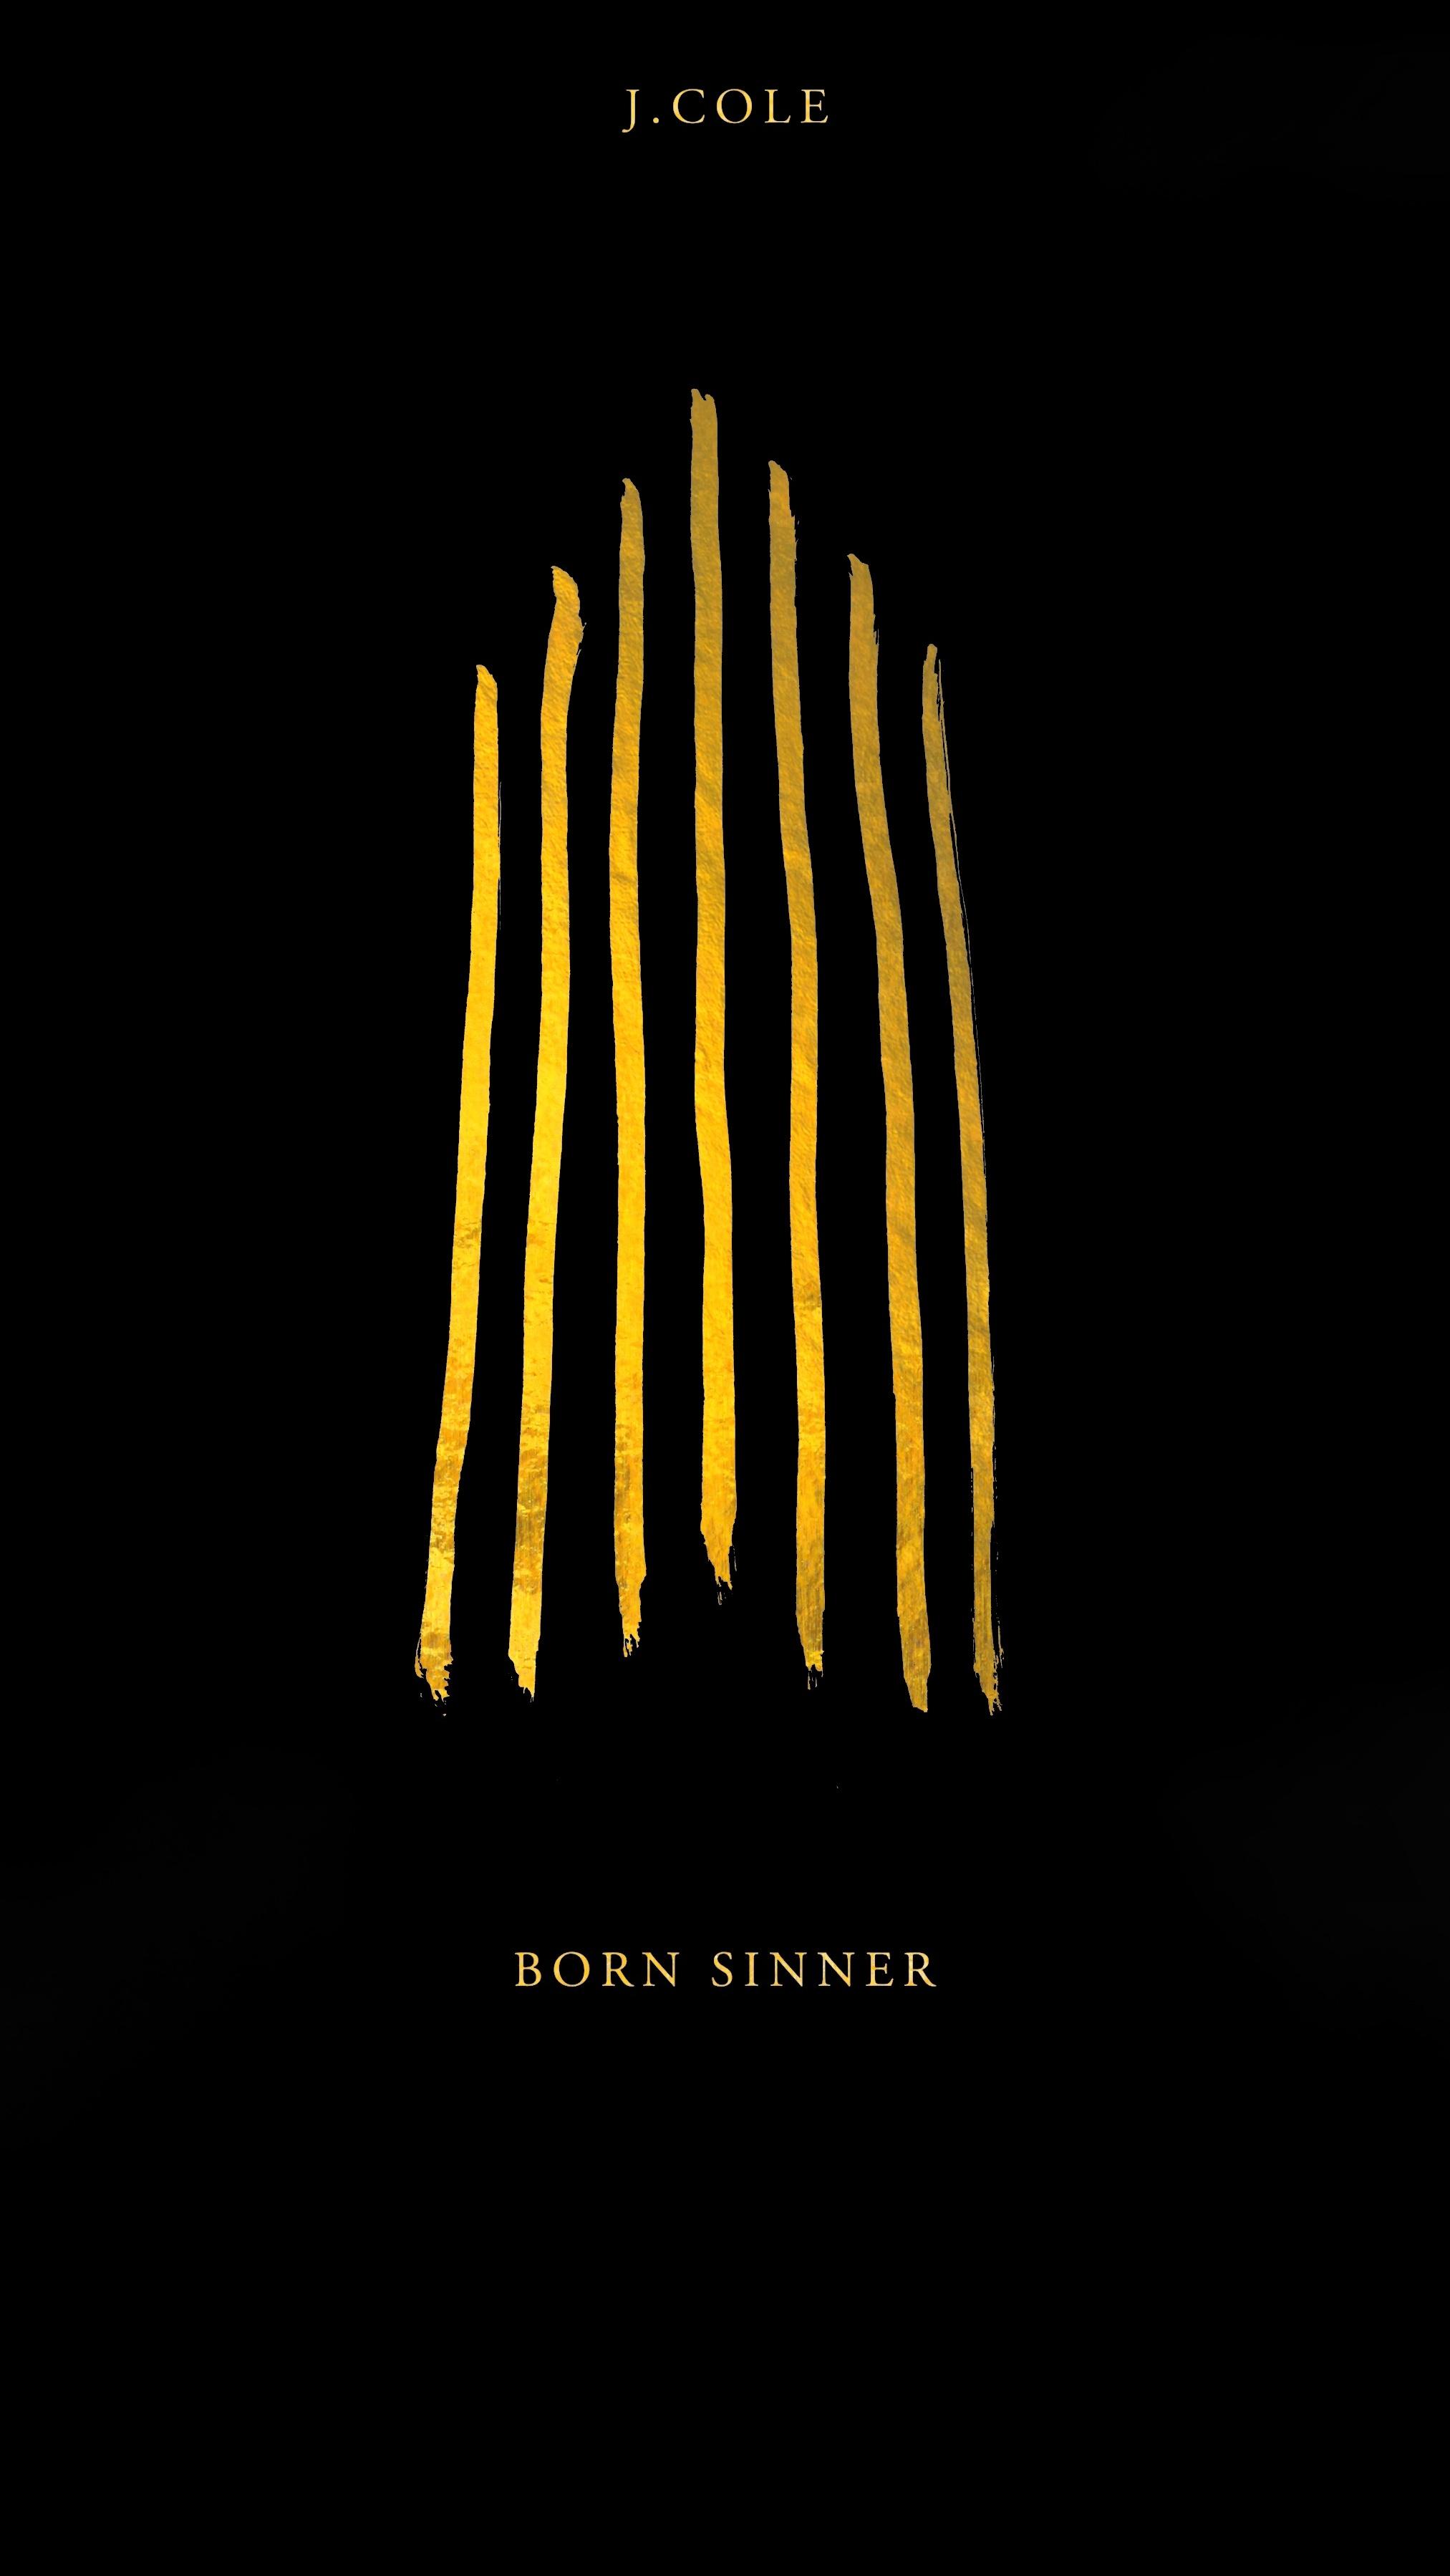 j cole born sinner album info